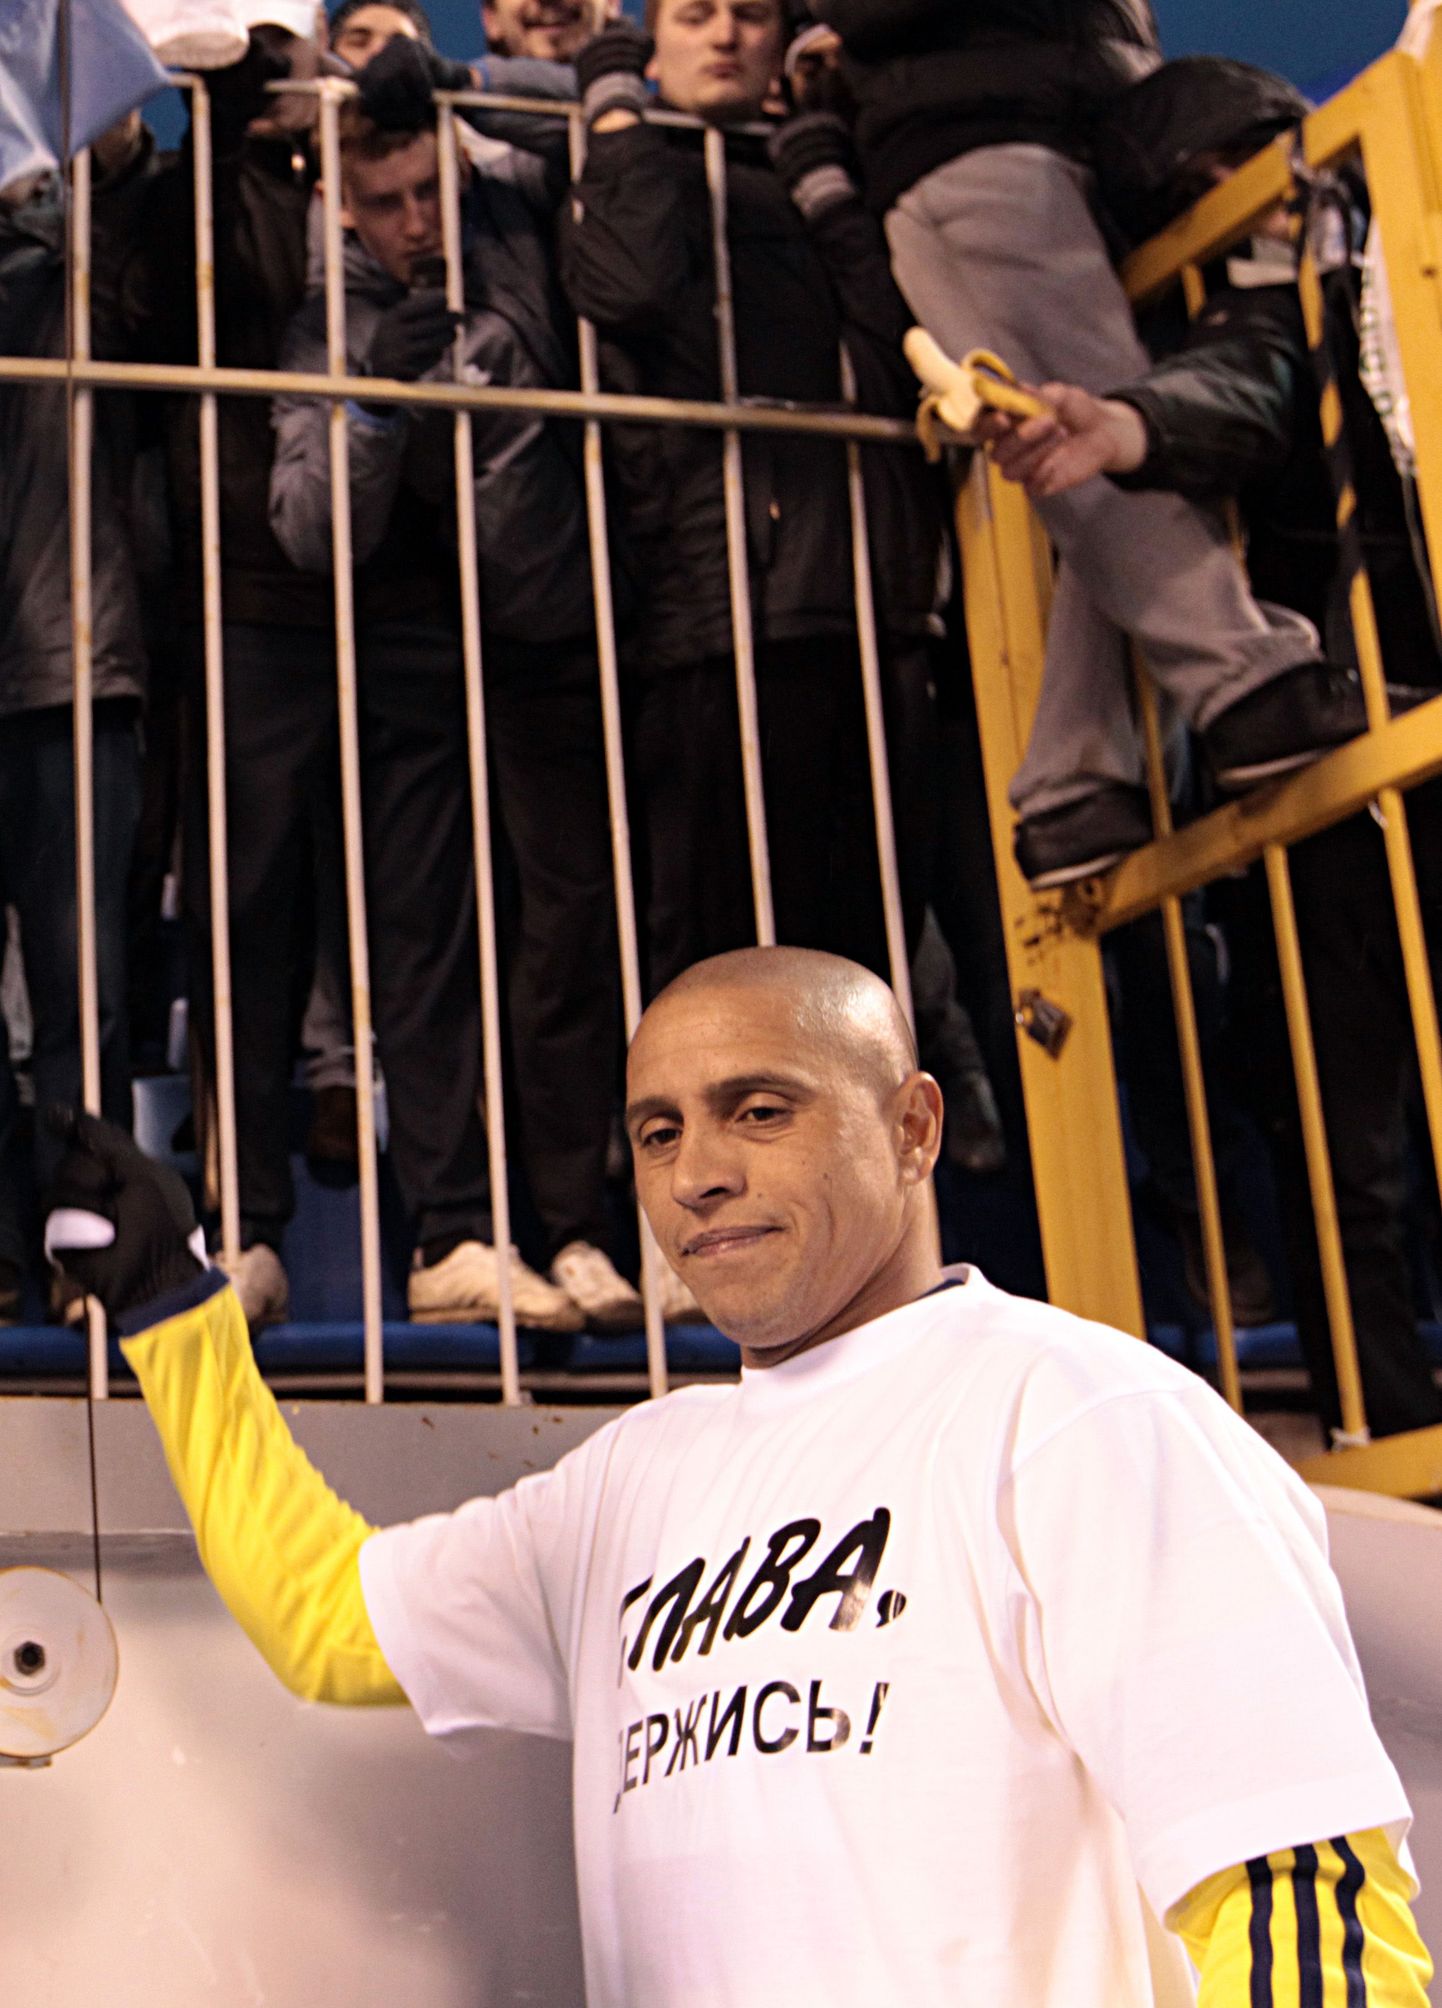 Роберто Карлосу болельщики "Зенита" во время матча с "Анжи" протянули банан.